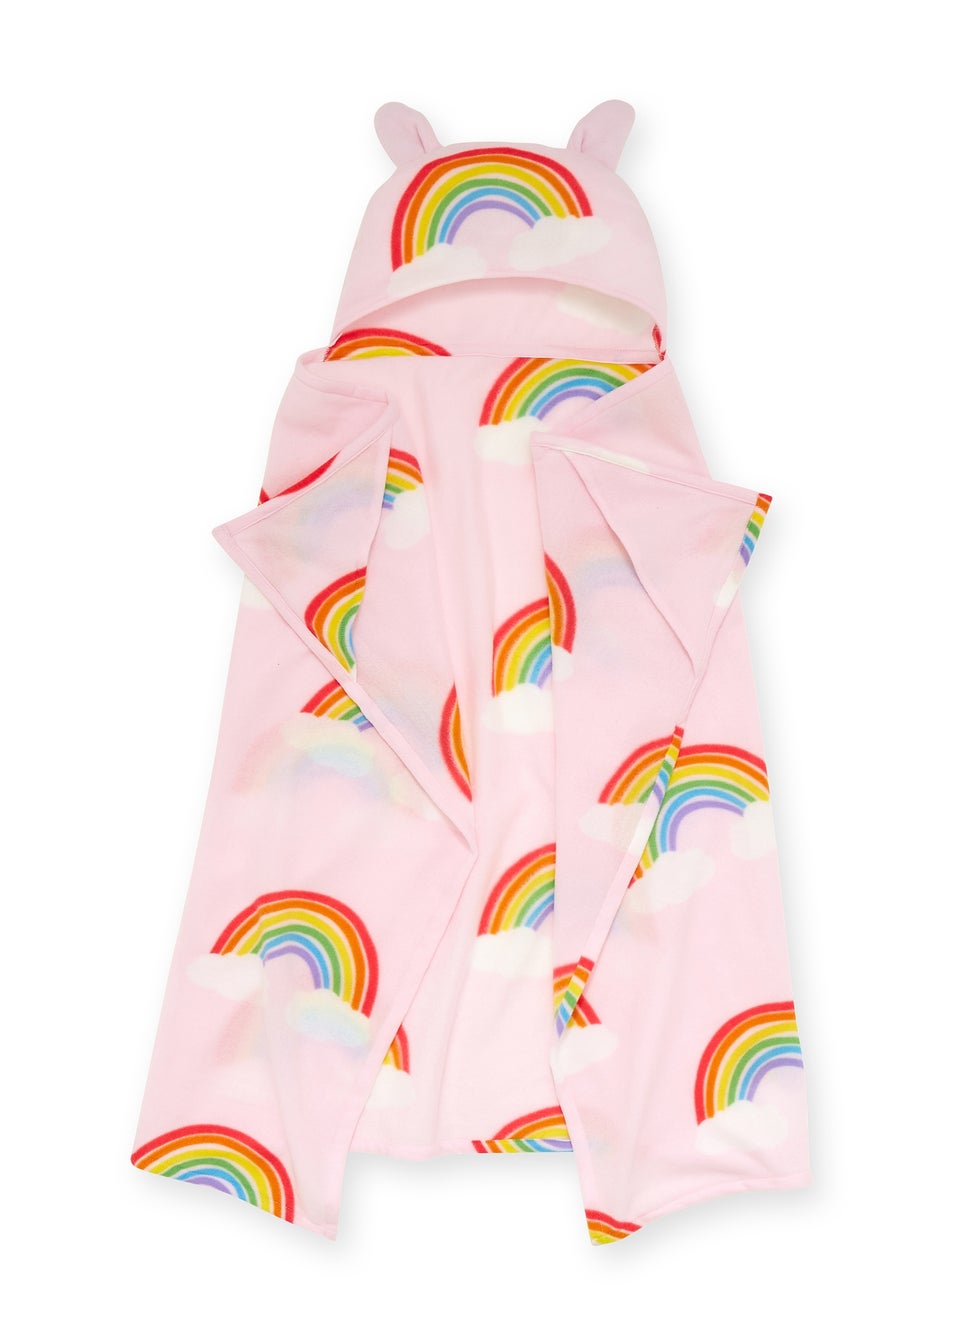 Catherine Lansfield Уютное флисовое одеяло с капюшоном Rainbow Hearts, розовый